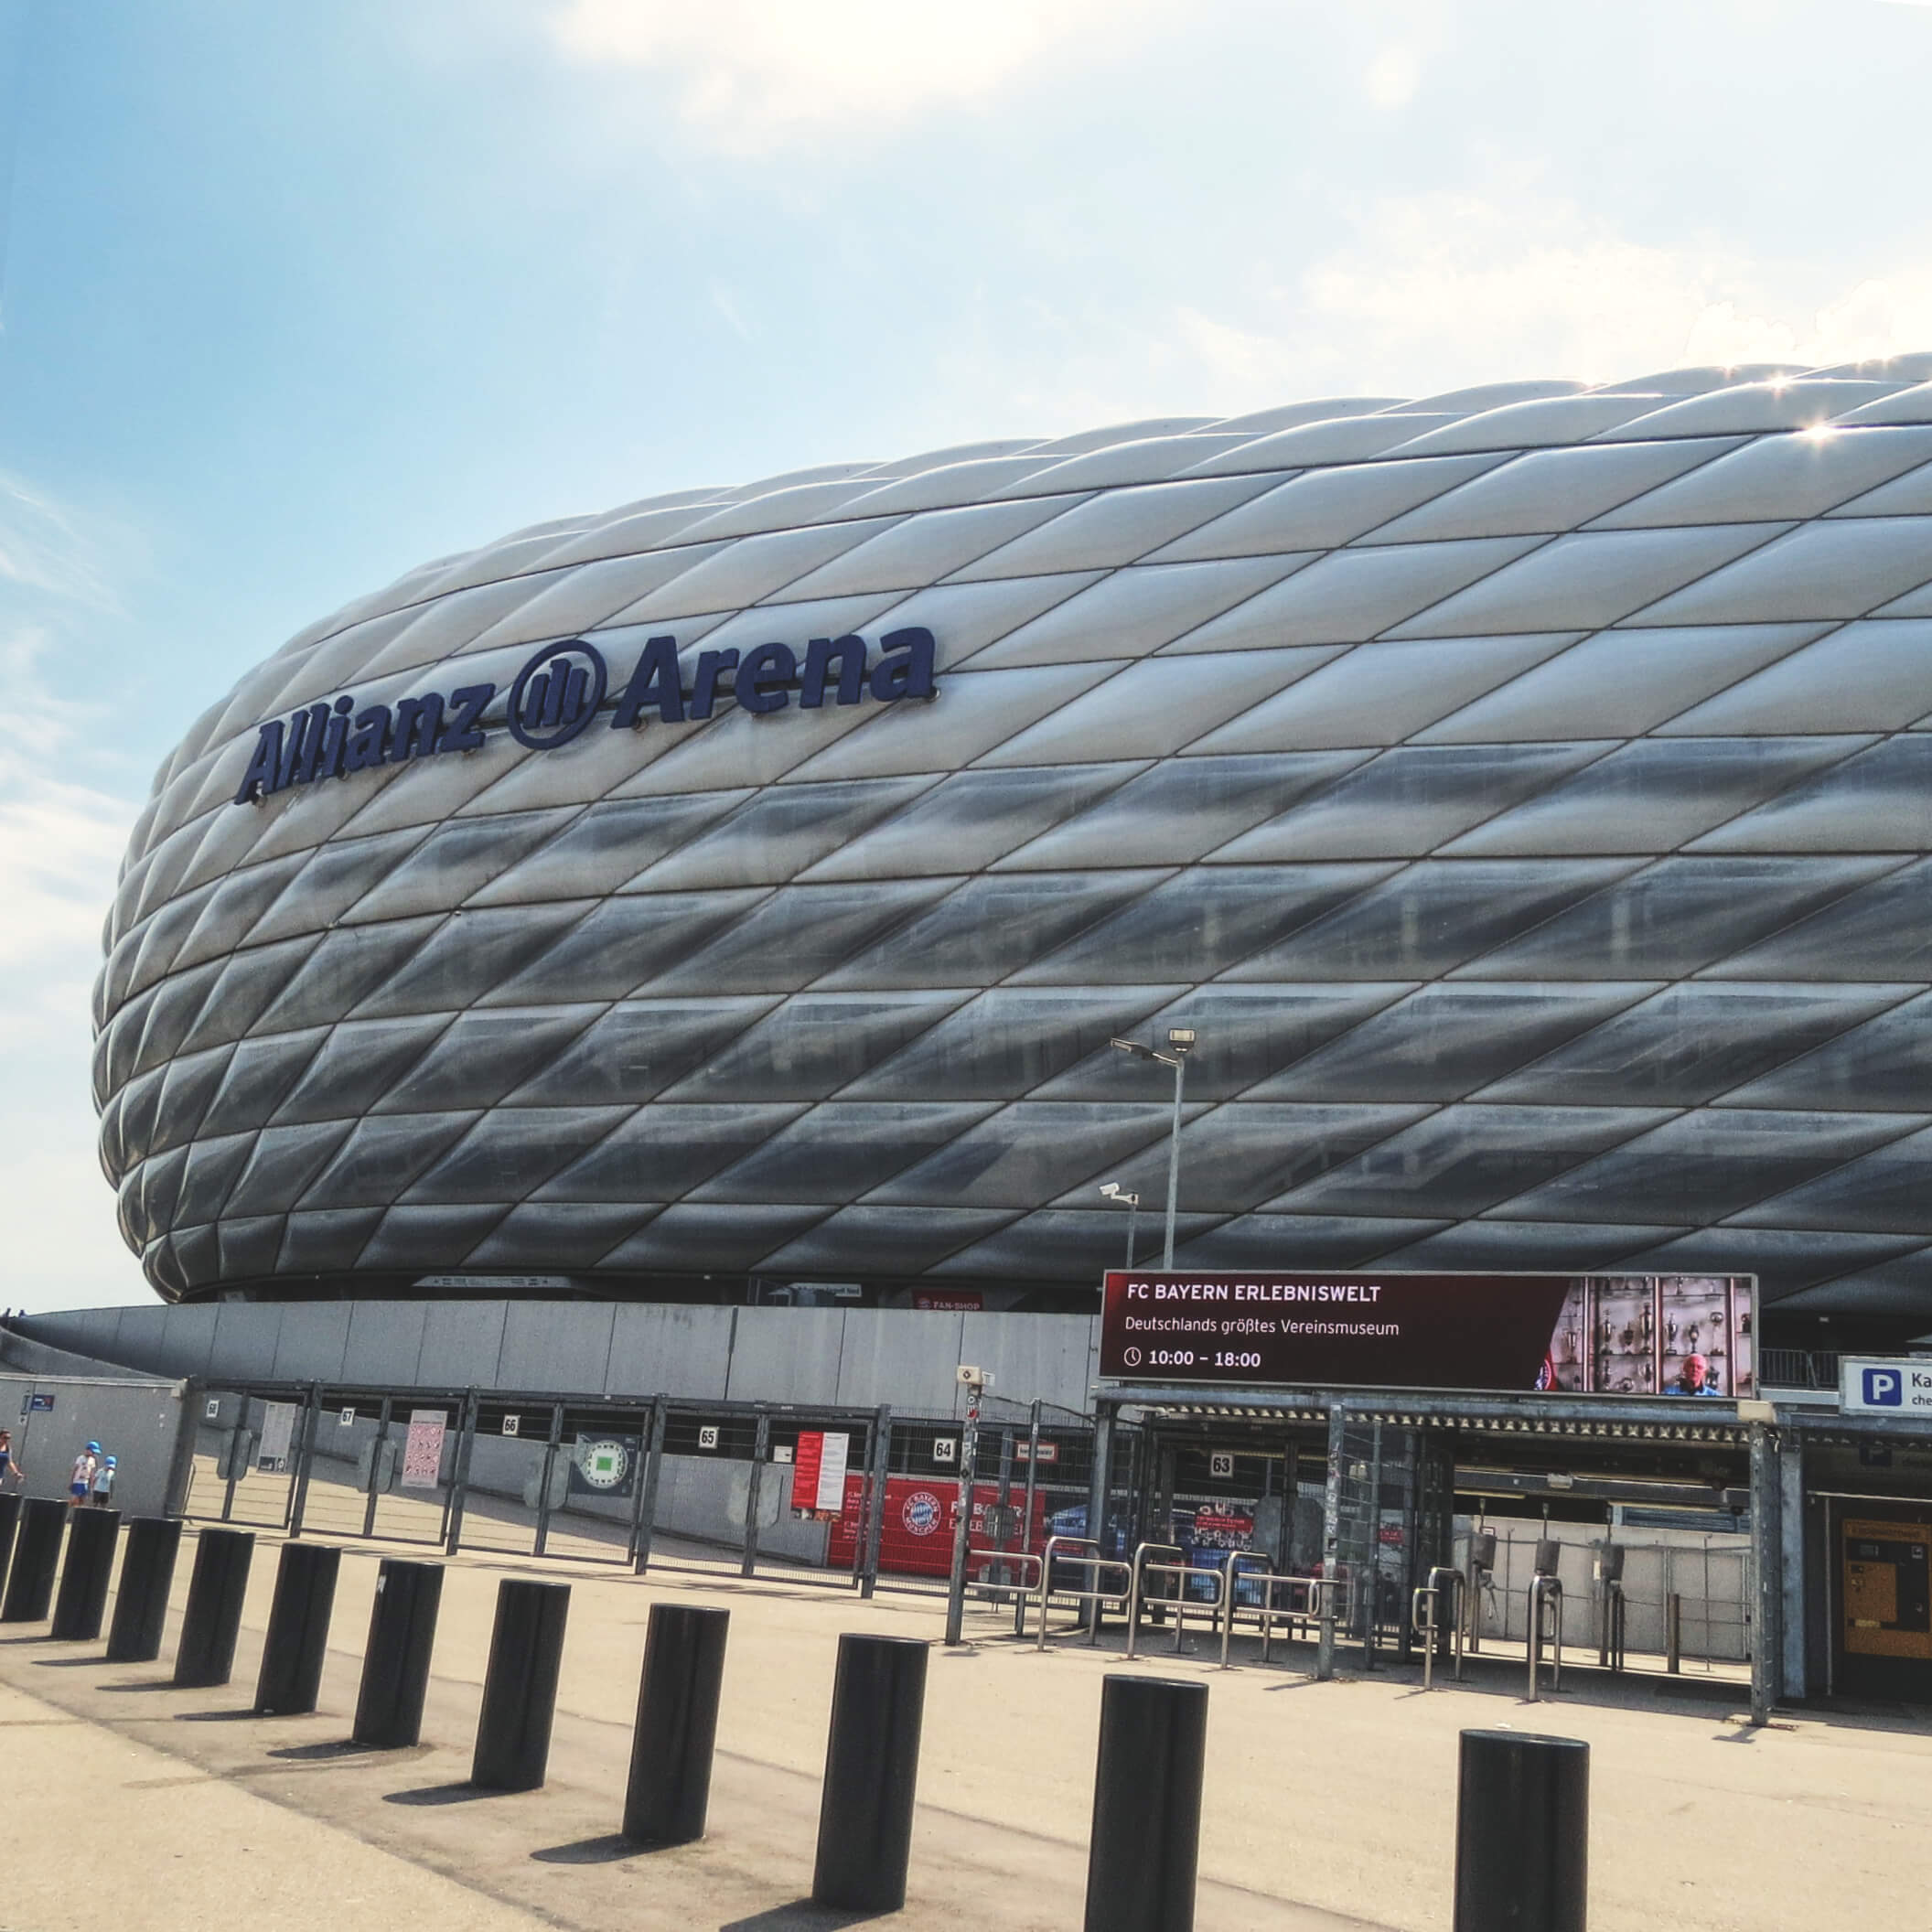 Stadium of Bayer Munich